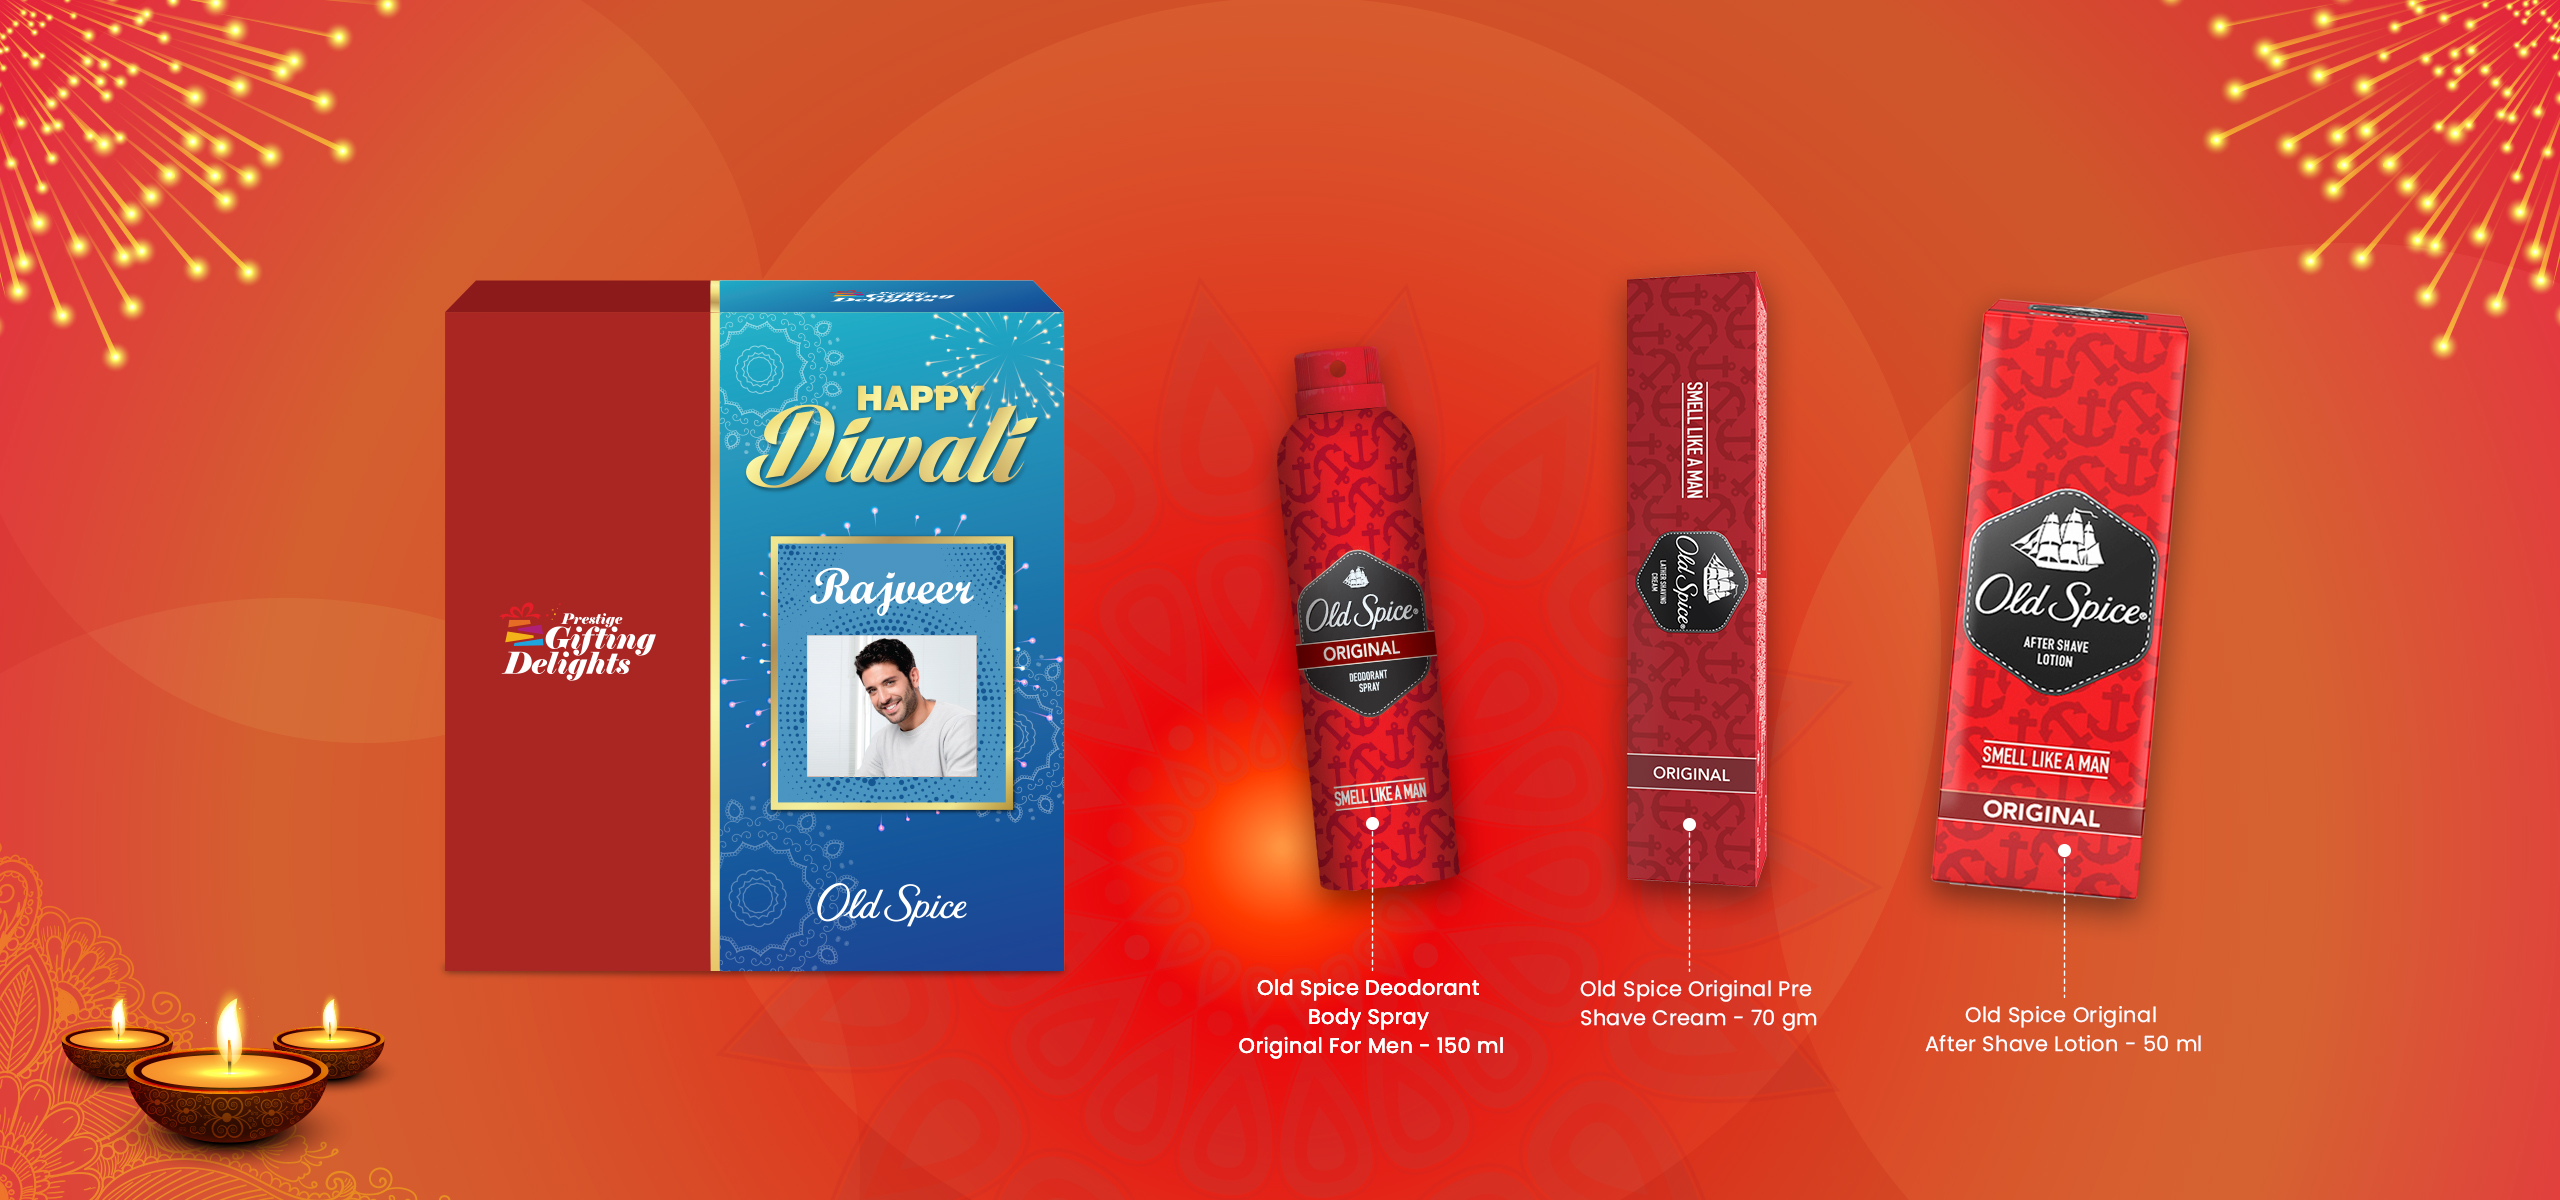 Old Spice Original Perfume Personal Grooming Diwali Gift Set for Men